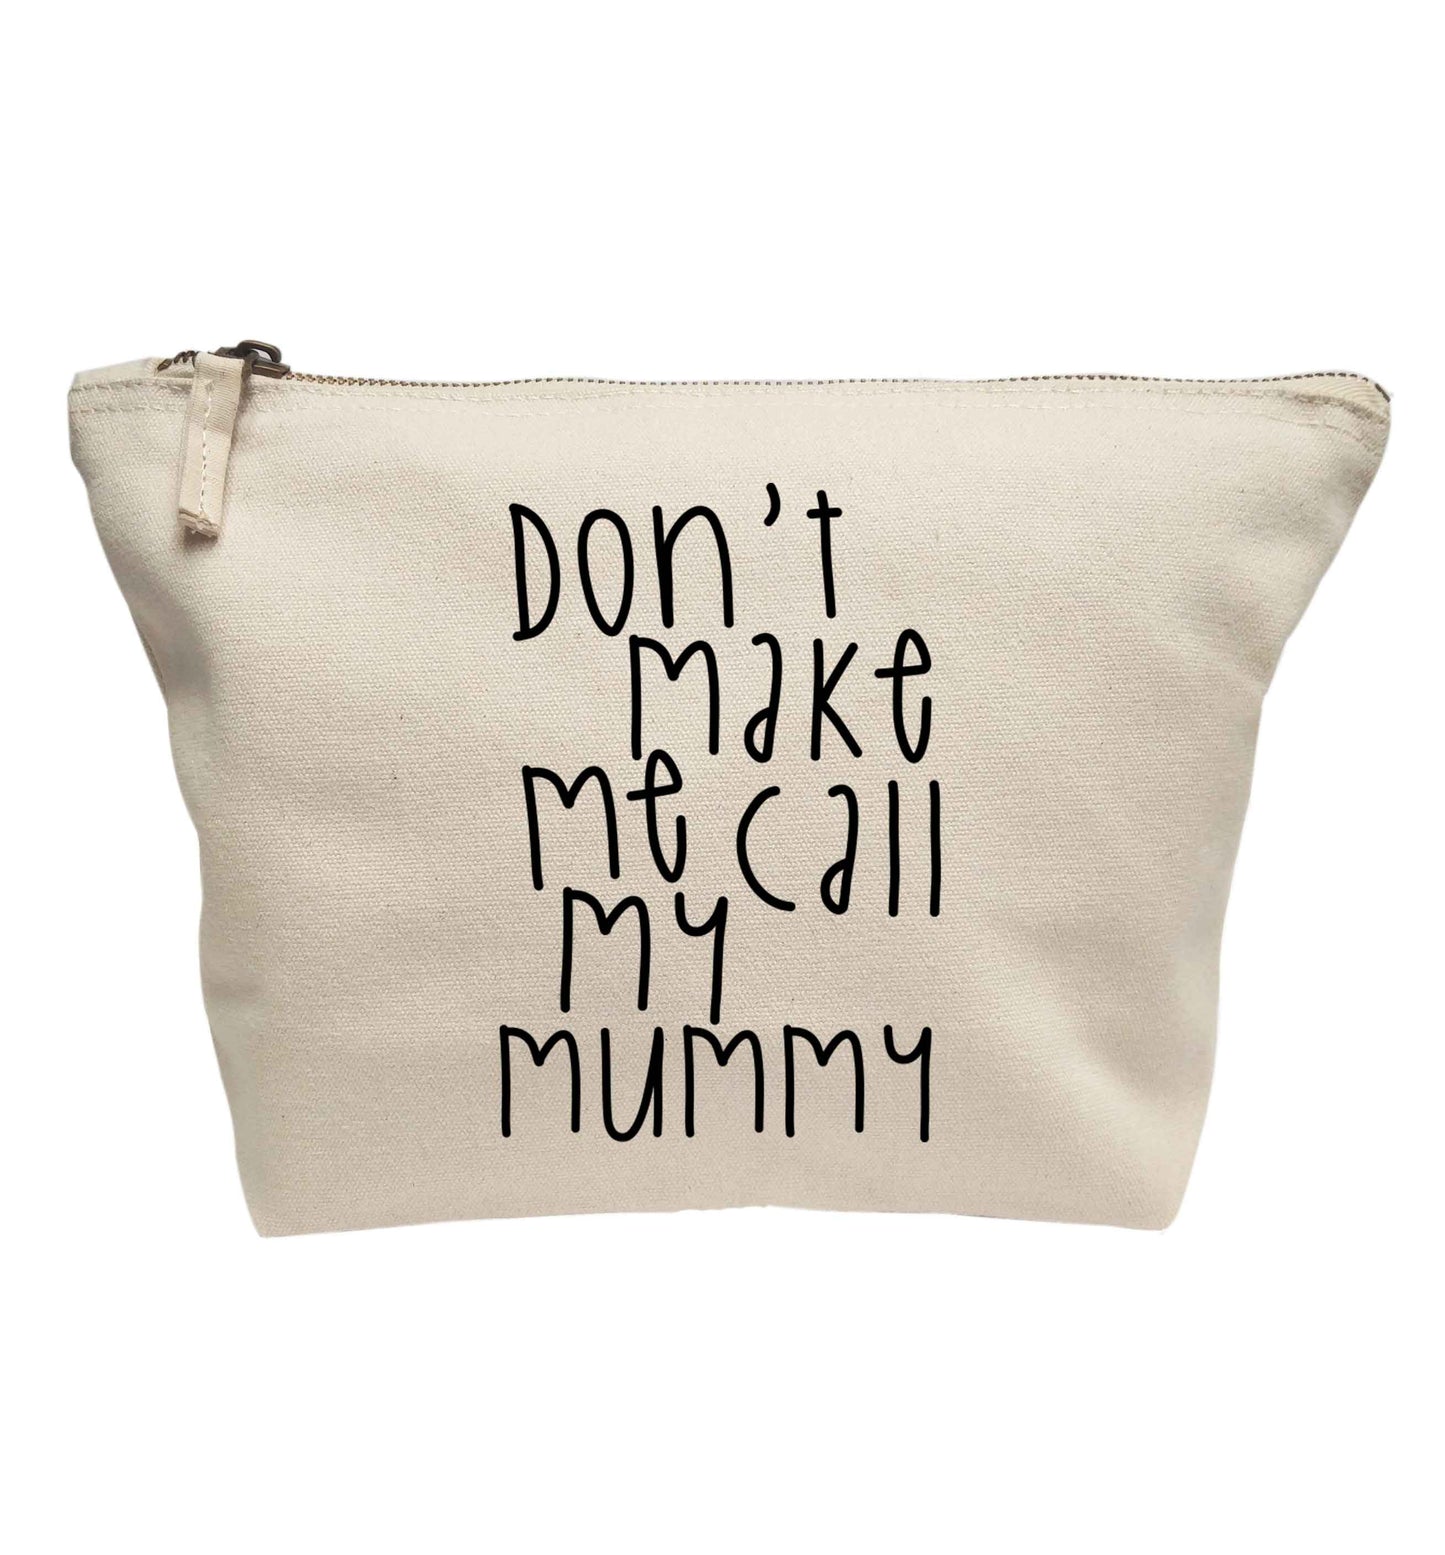 Don't make me call my mummy | Makeup / wash bag